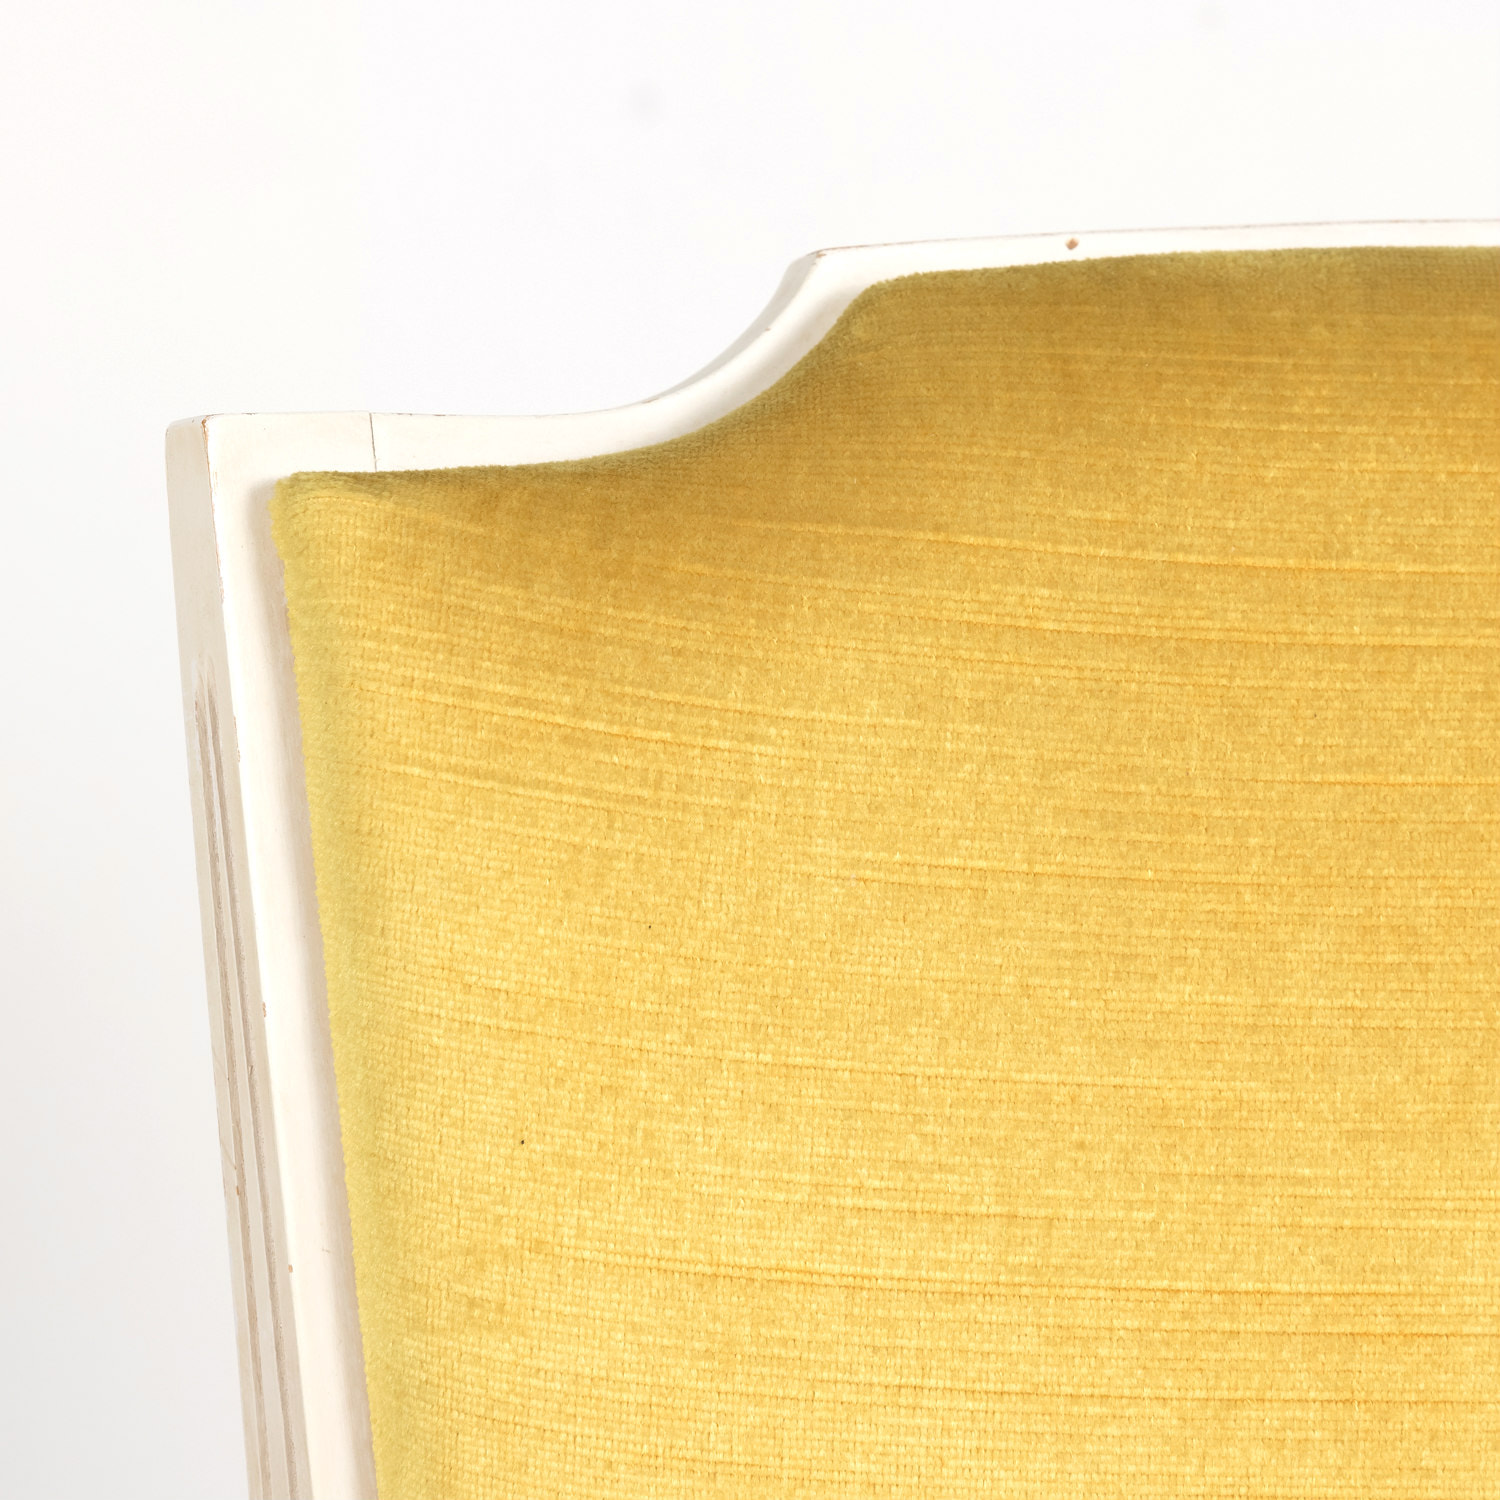 French louis xvi yellow velvet side chair